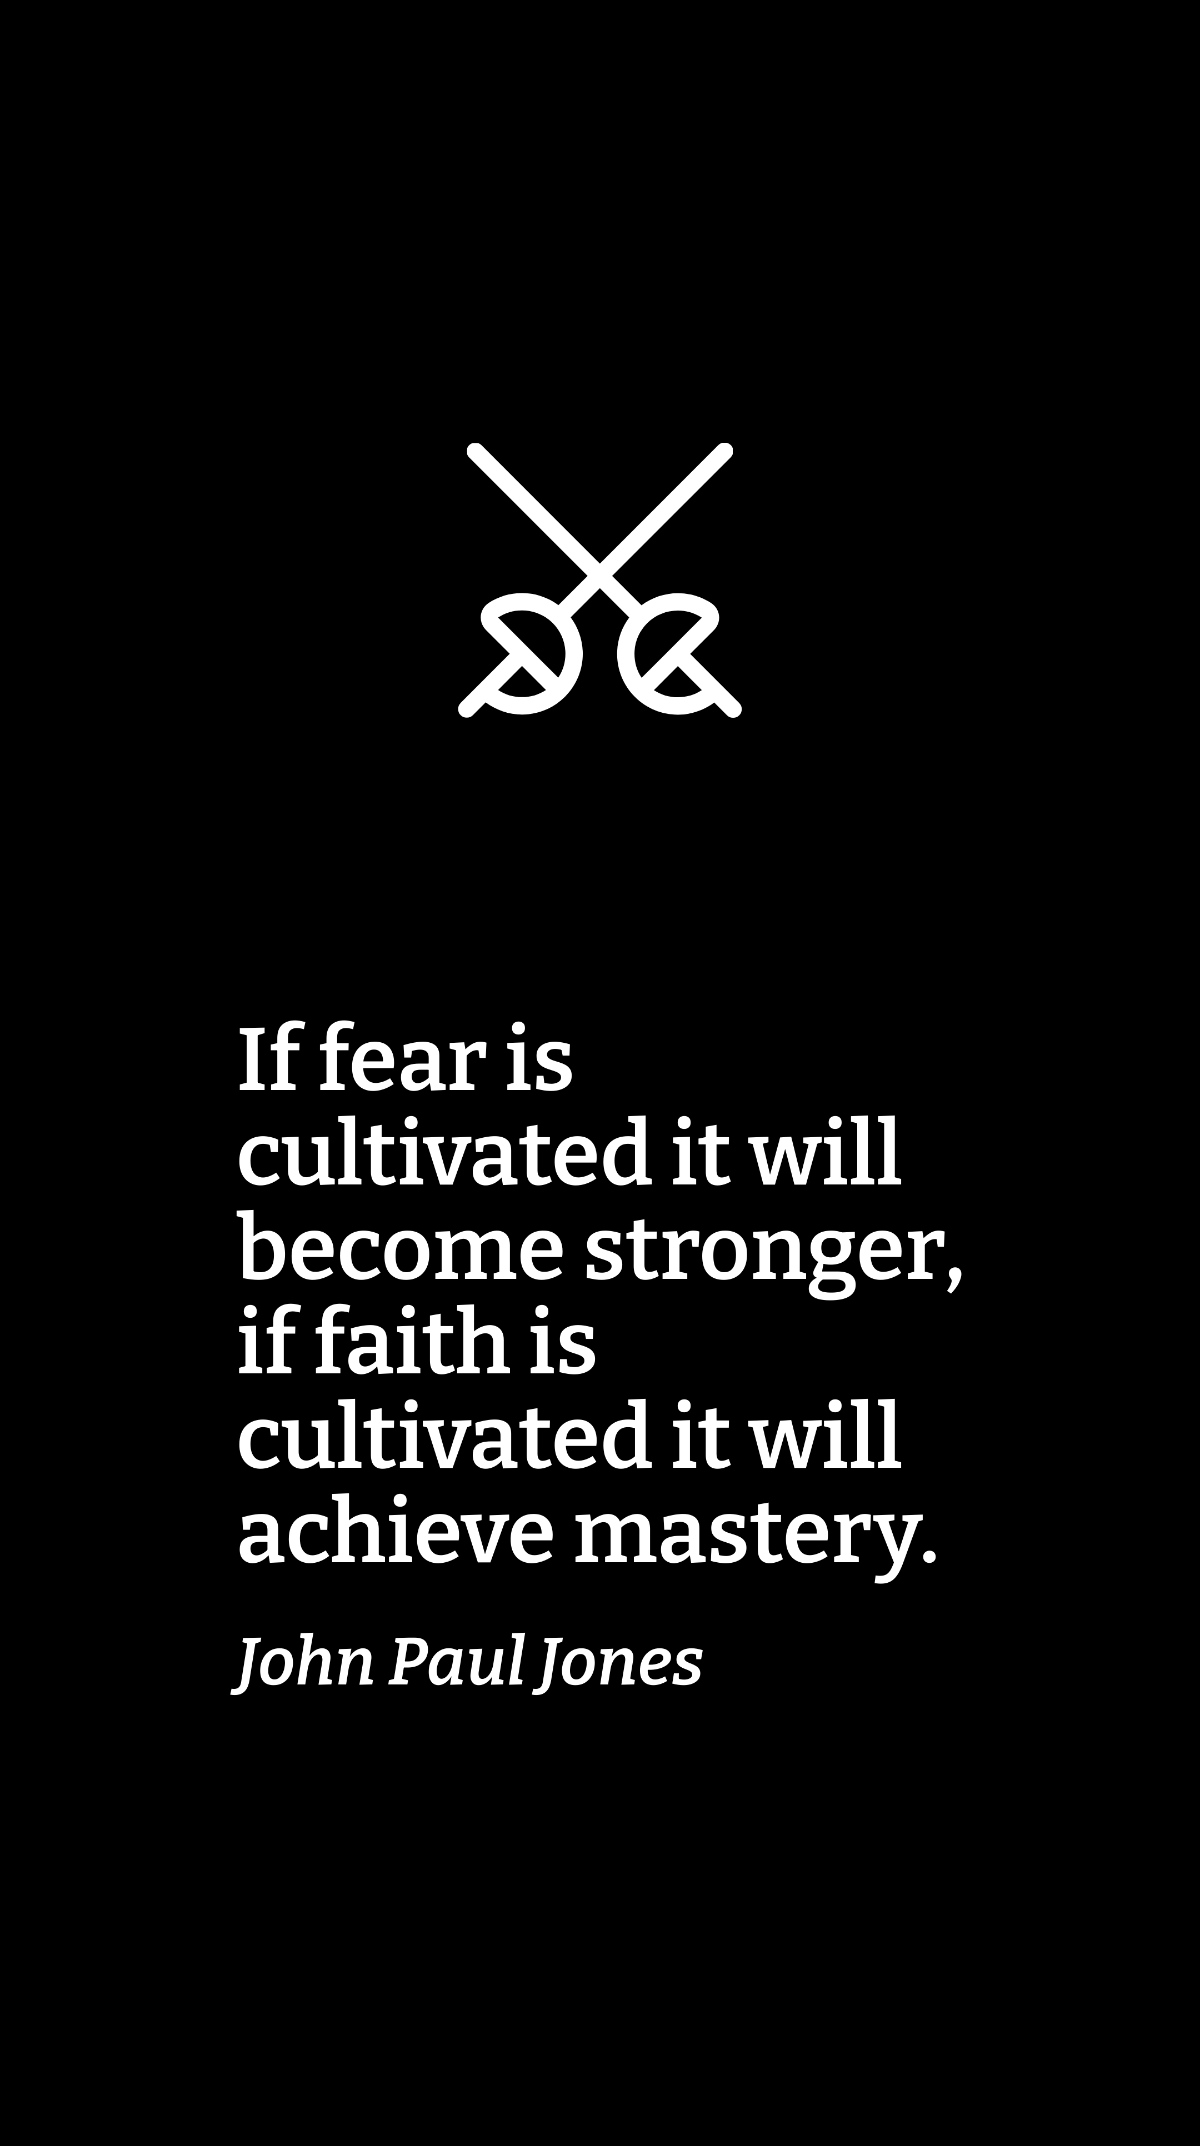 John Paul Jones - If fear is cultivated it will become stronger, if faith is cultivated it will achieve mastery.